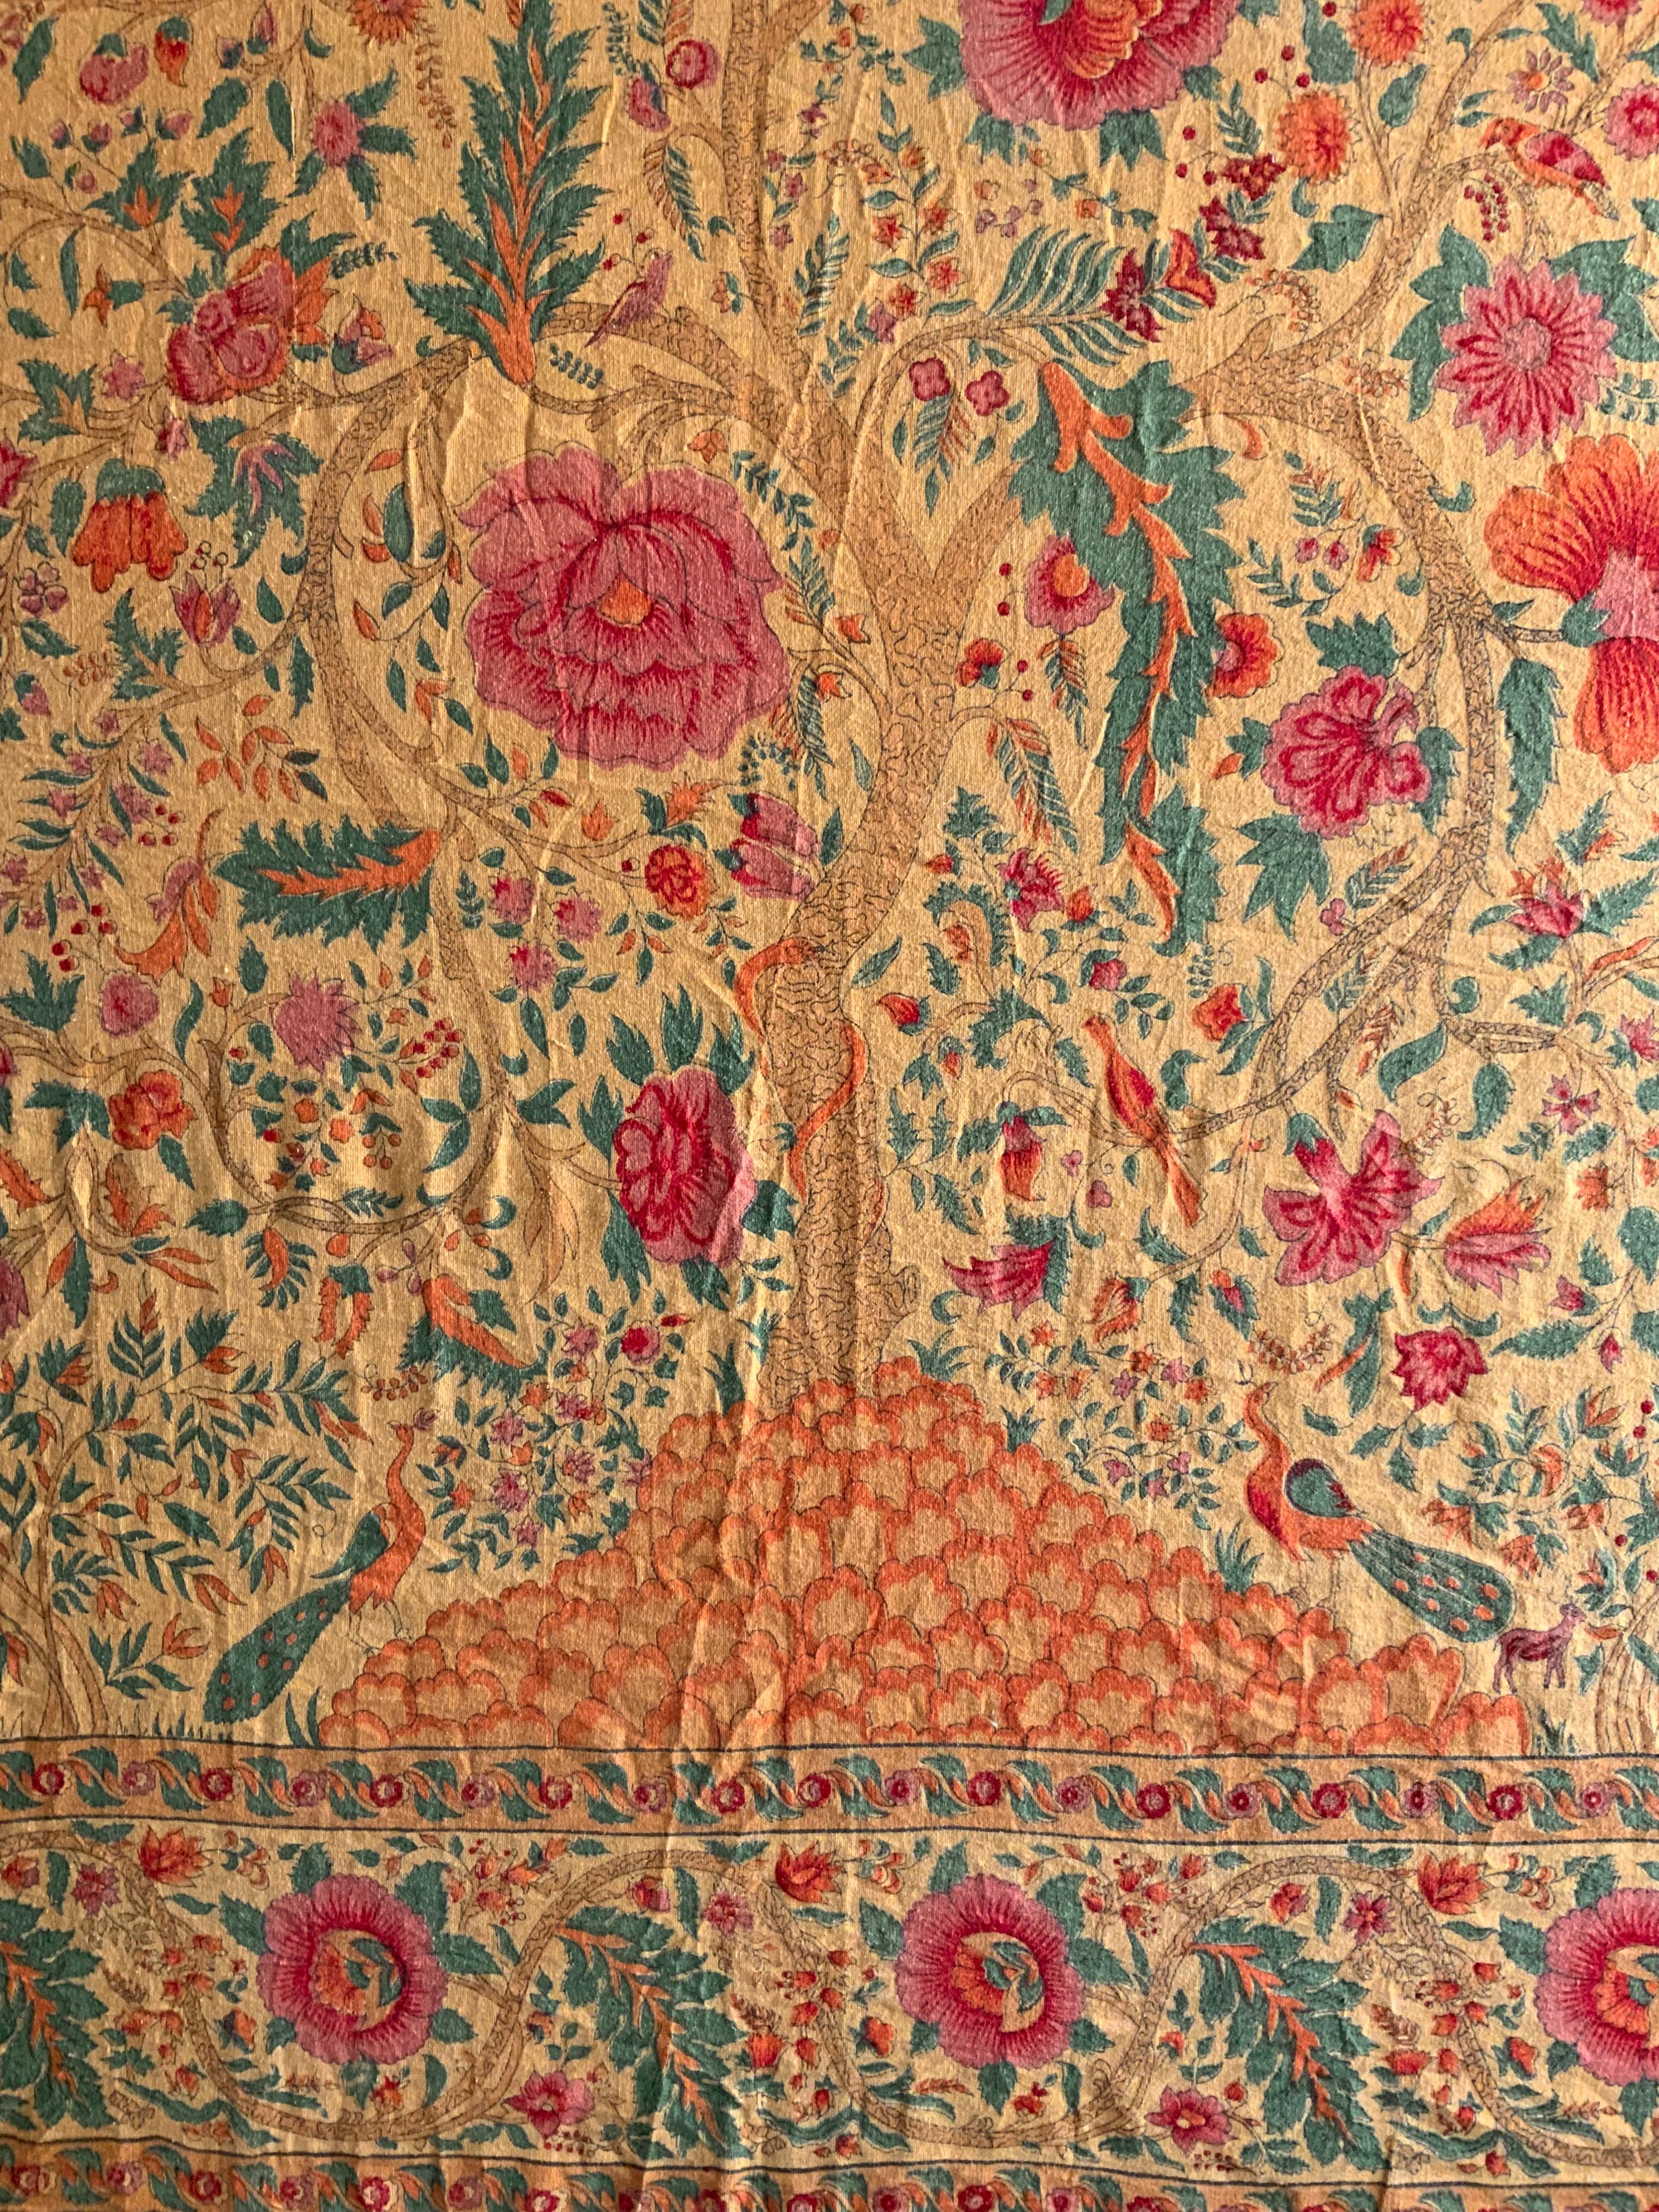 Indian bedspread in palampore design (152 x 242cm)